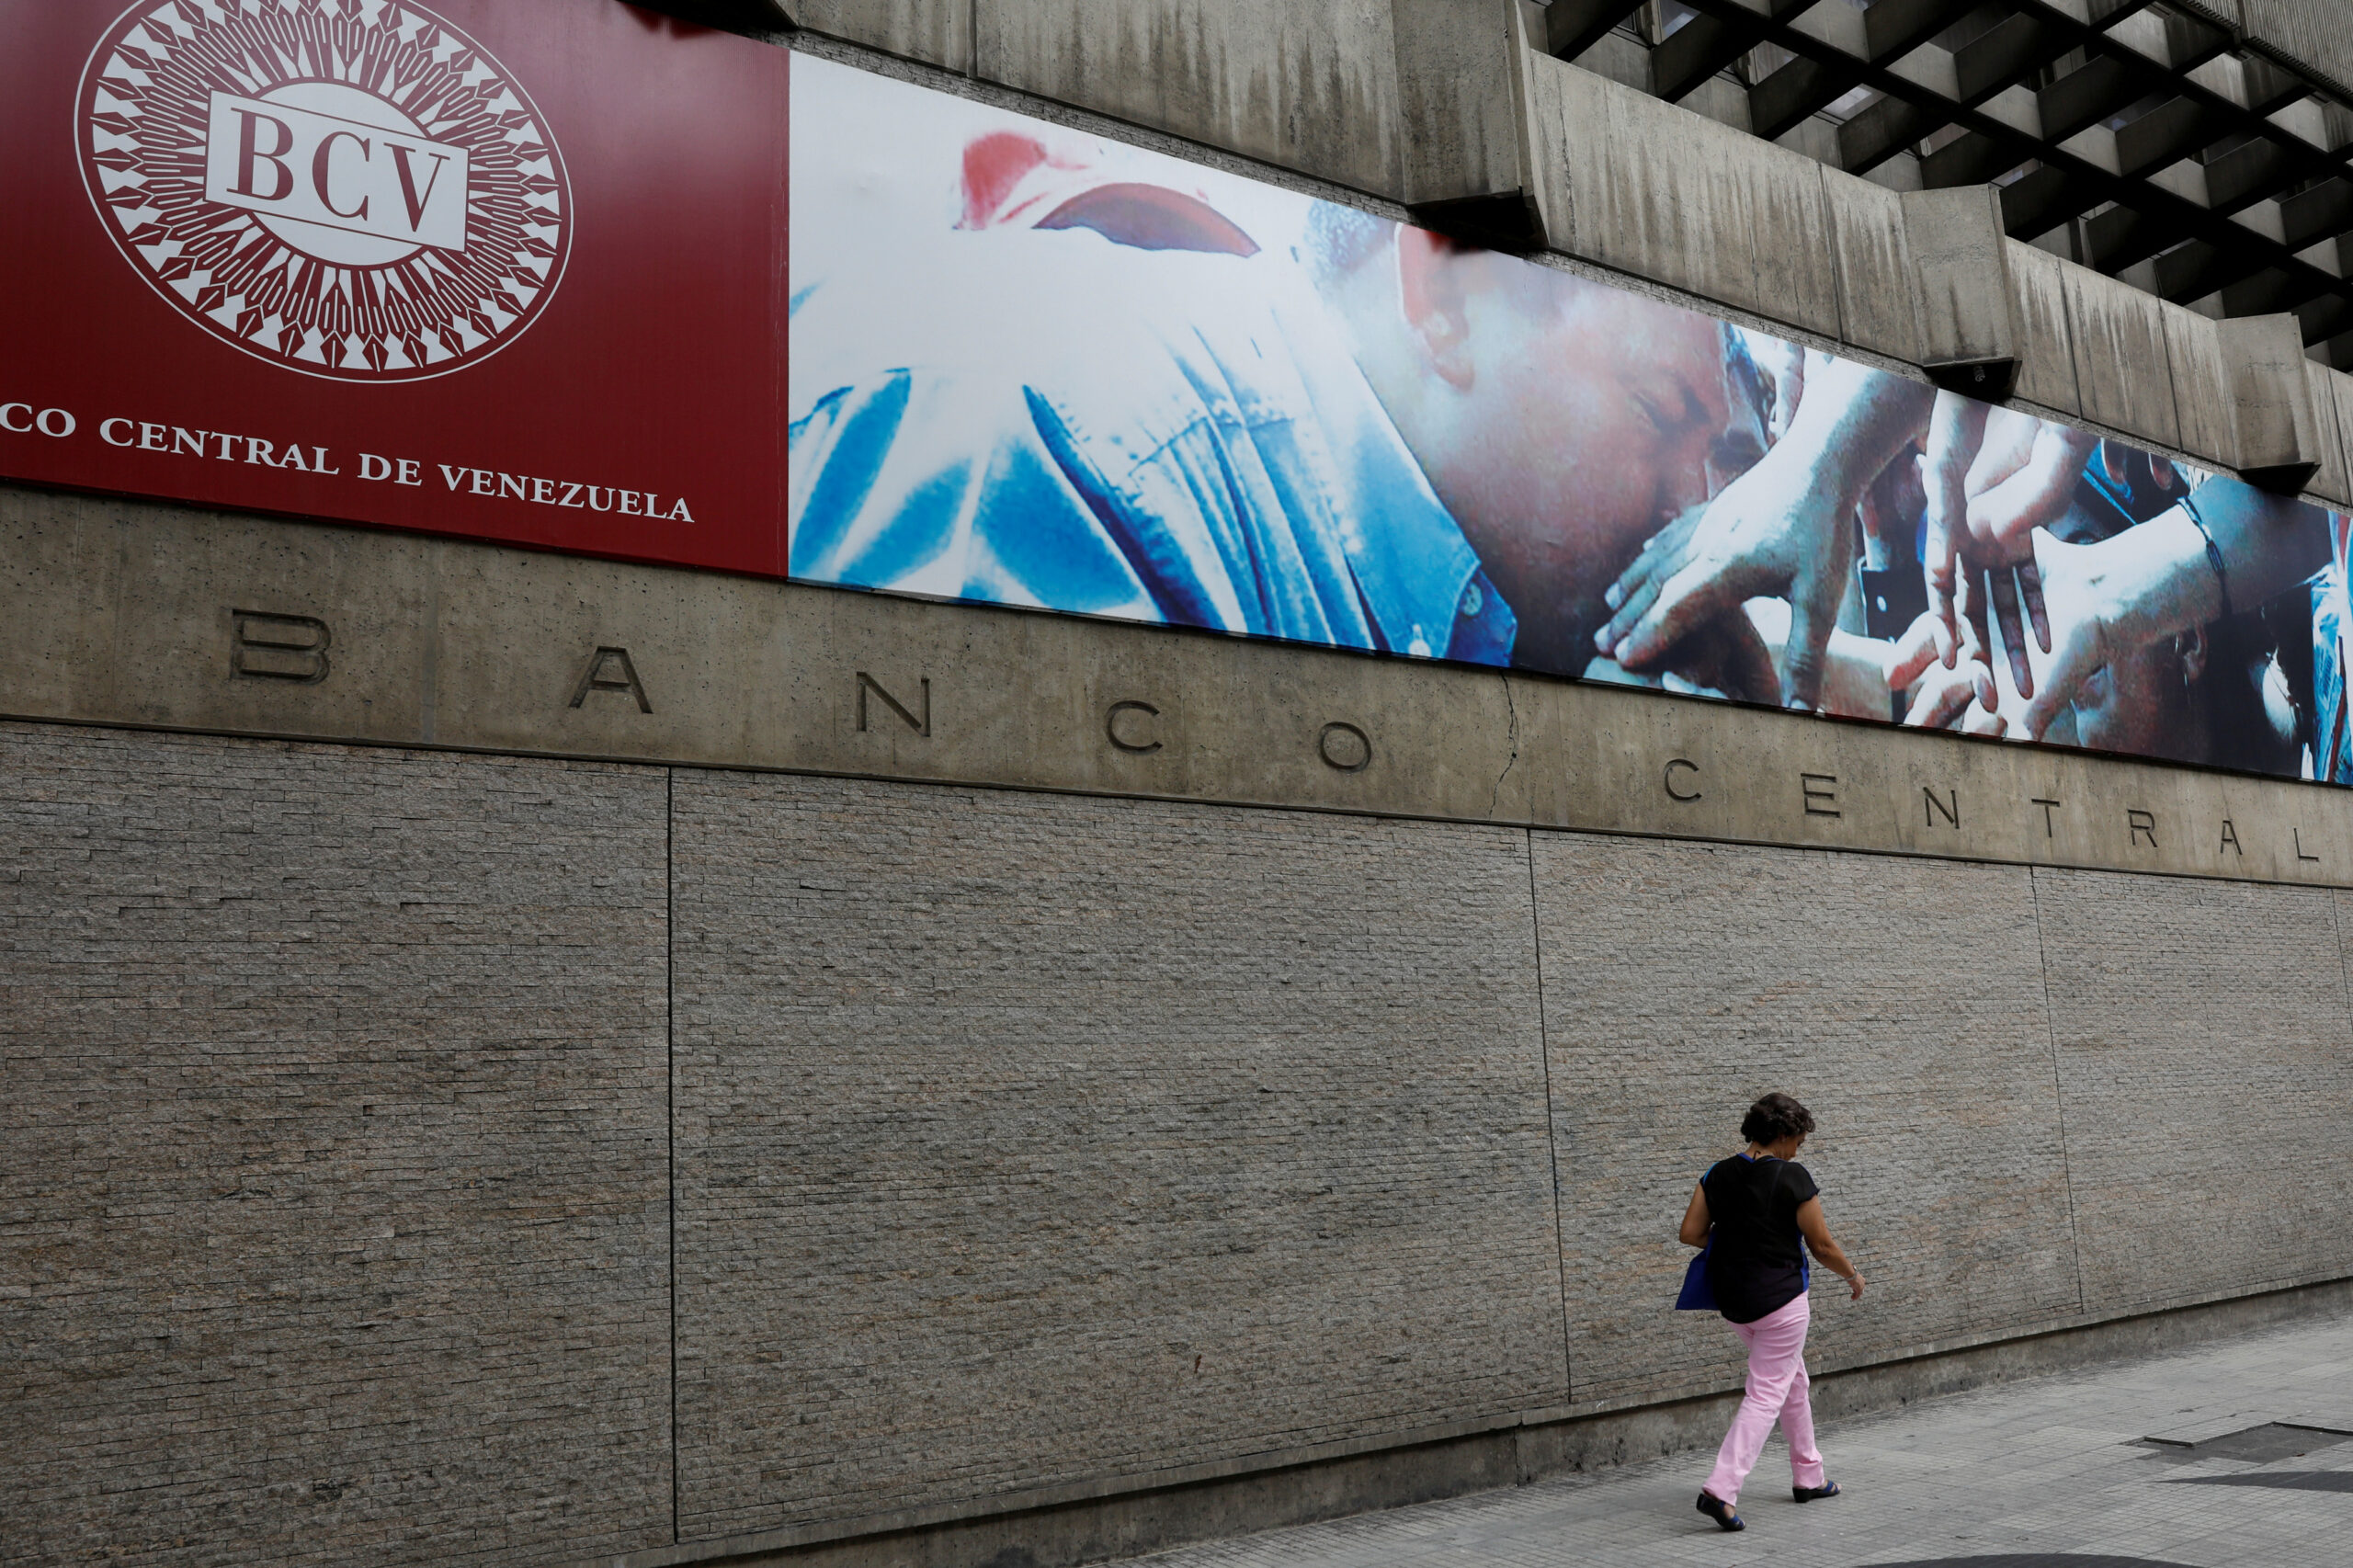 Régimen chavista discutirá plan de dolarización con bancos nacionales, según Bloomberg